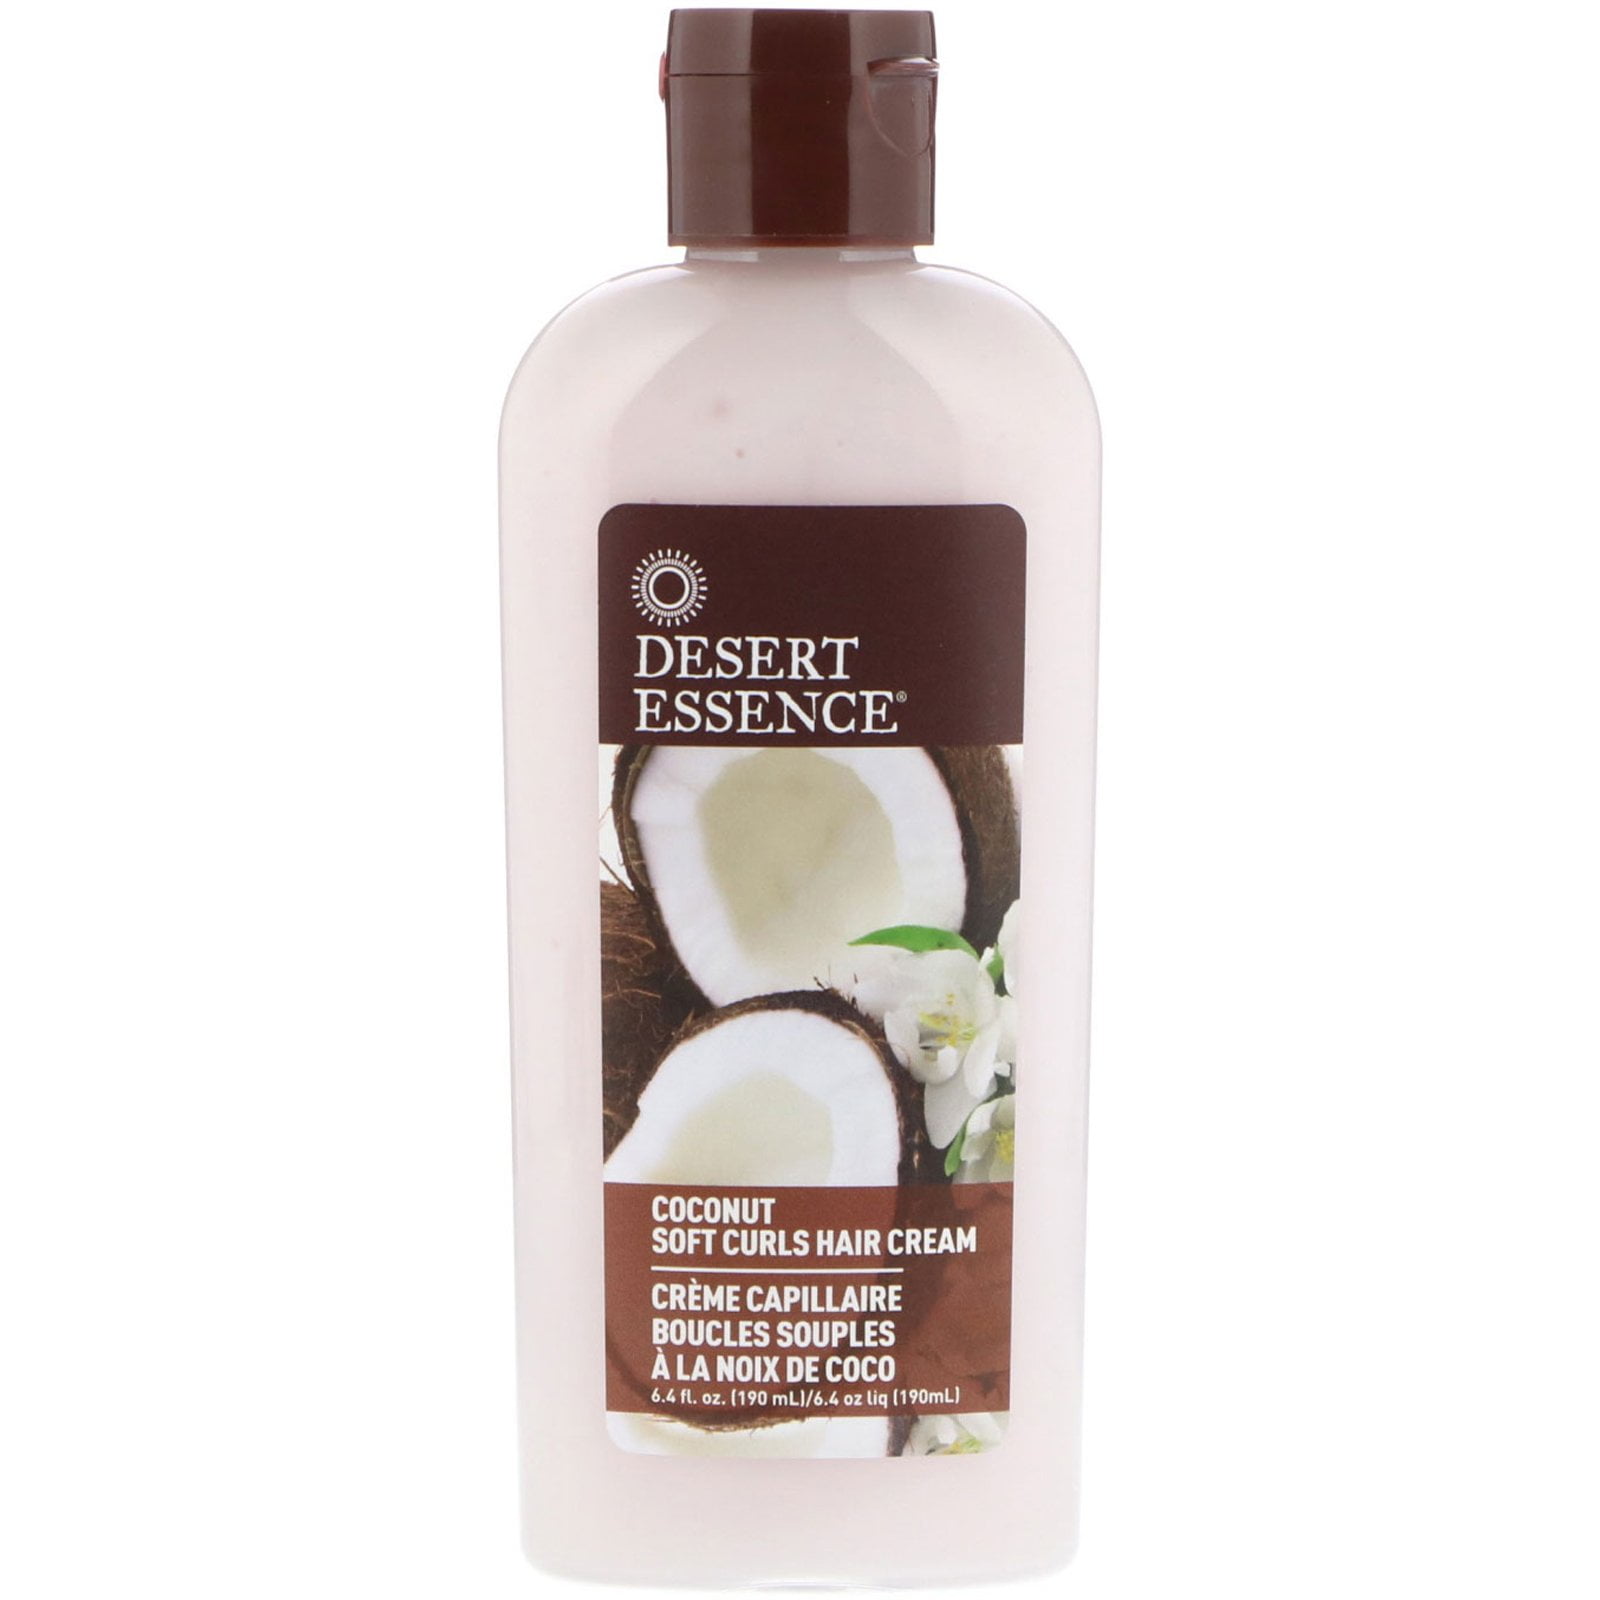 Desert Essence Soft Curls Hair Cream, Coconut,  fl oz (190 ml) -  